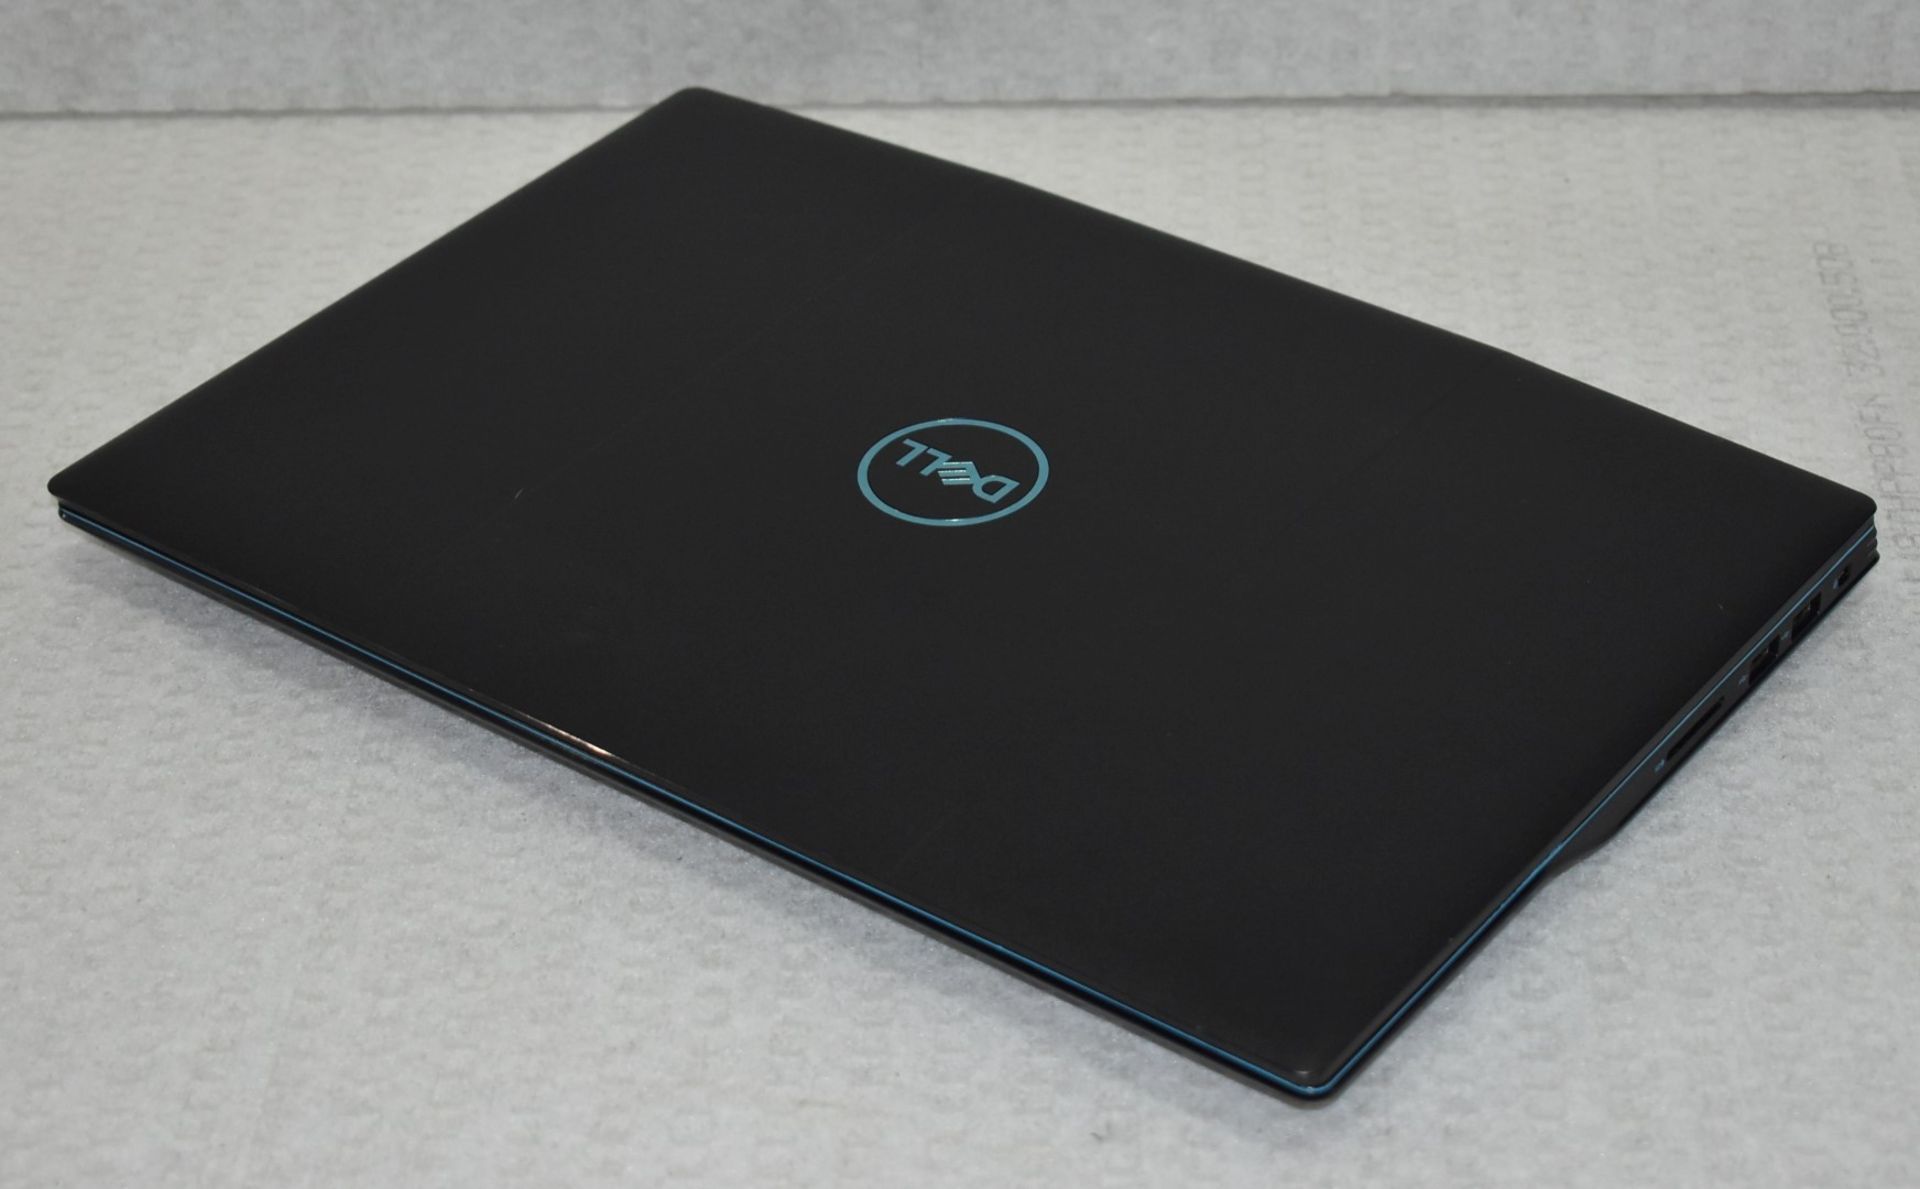 1 x Dell G3 15.6" FHD Gaming Laptop - Intel I5-9300H CPU, 8gb DDR4 Ram, 500gb SSD, GTX1050 Graphics - Image 11 of 30